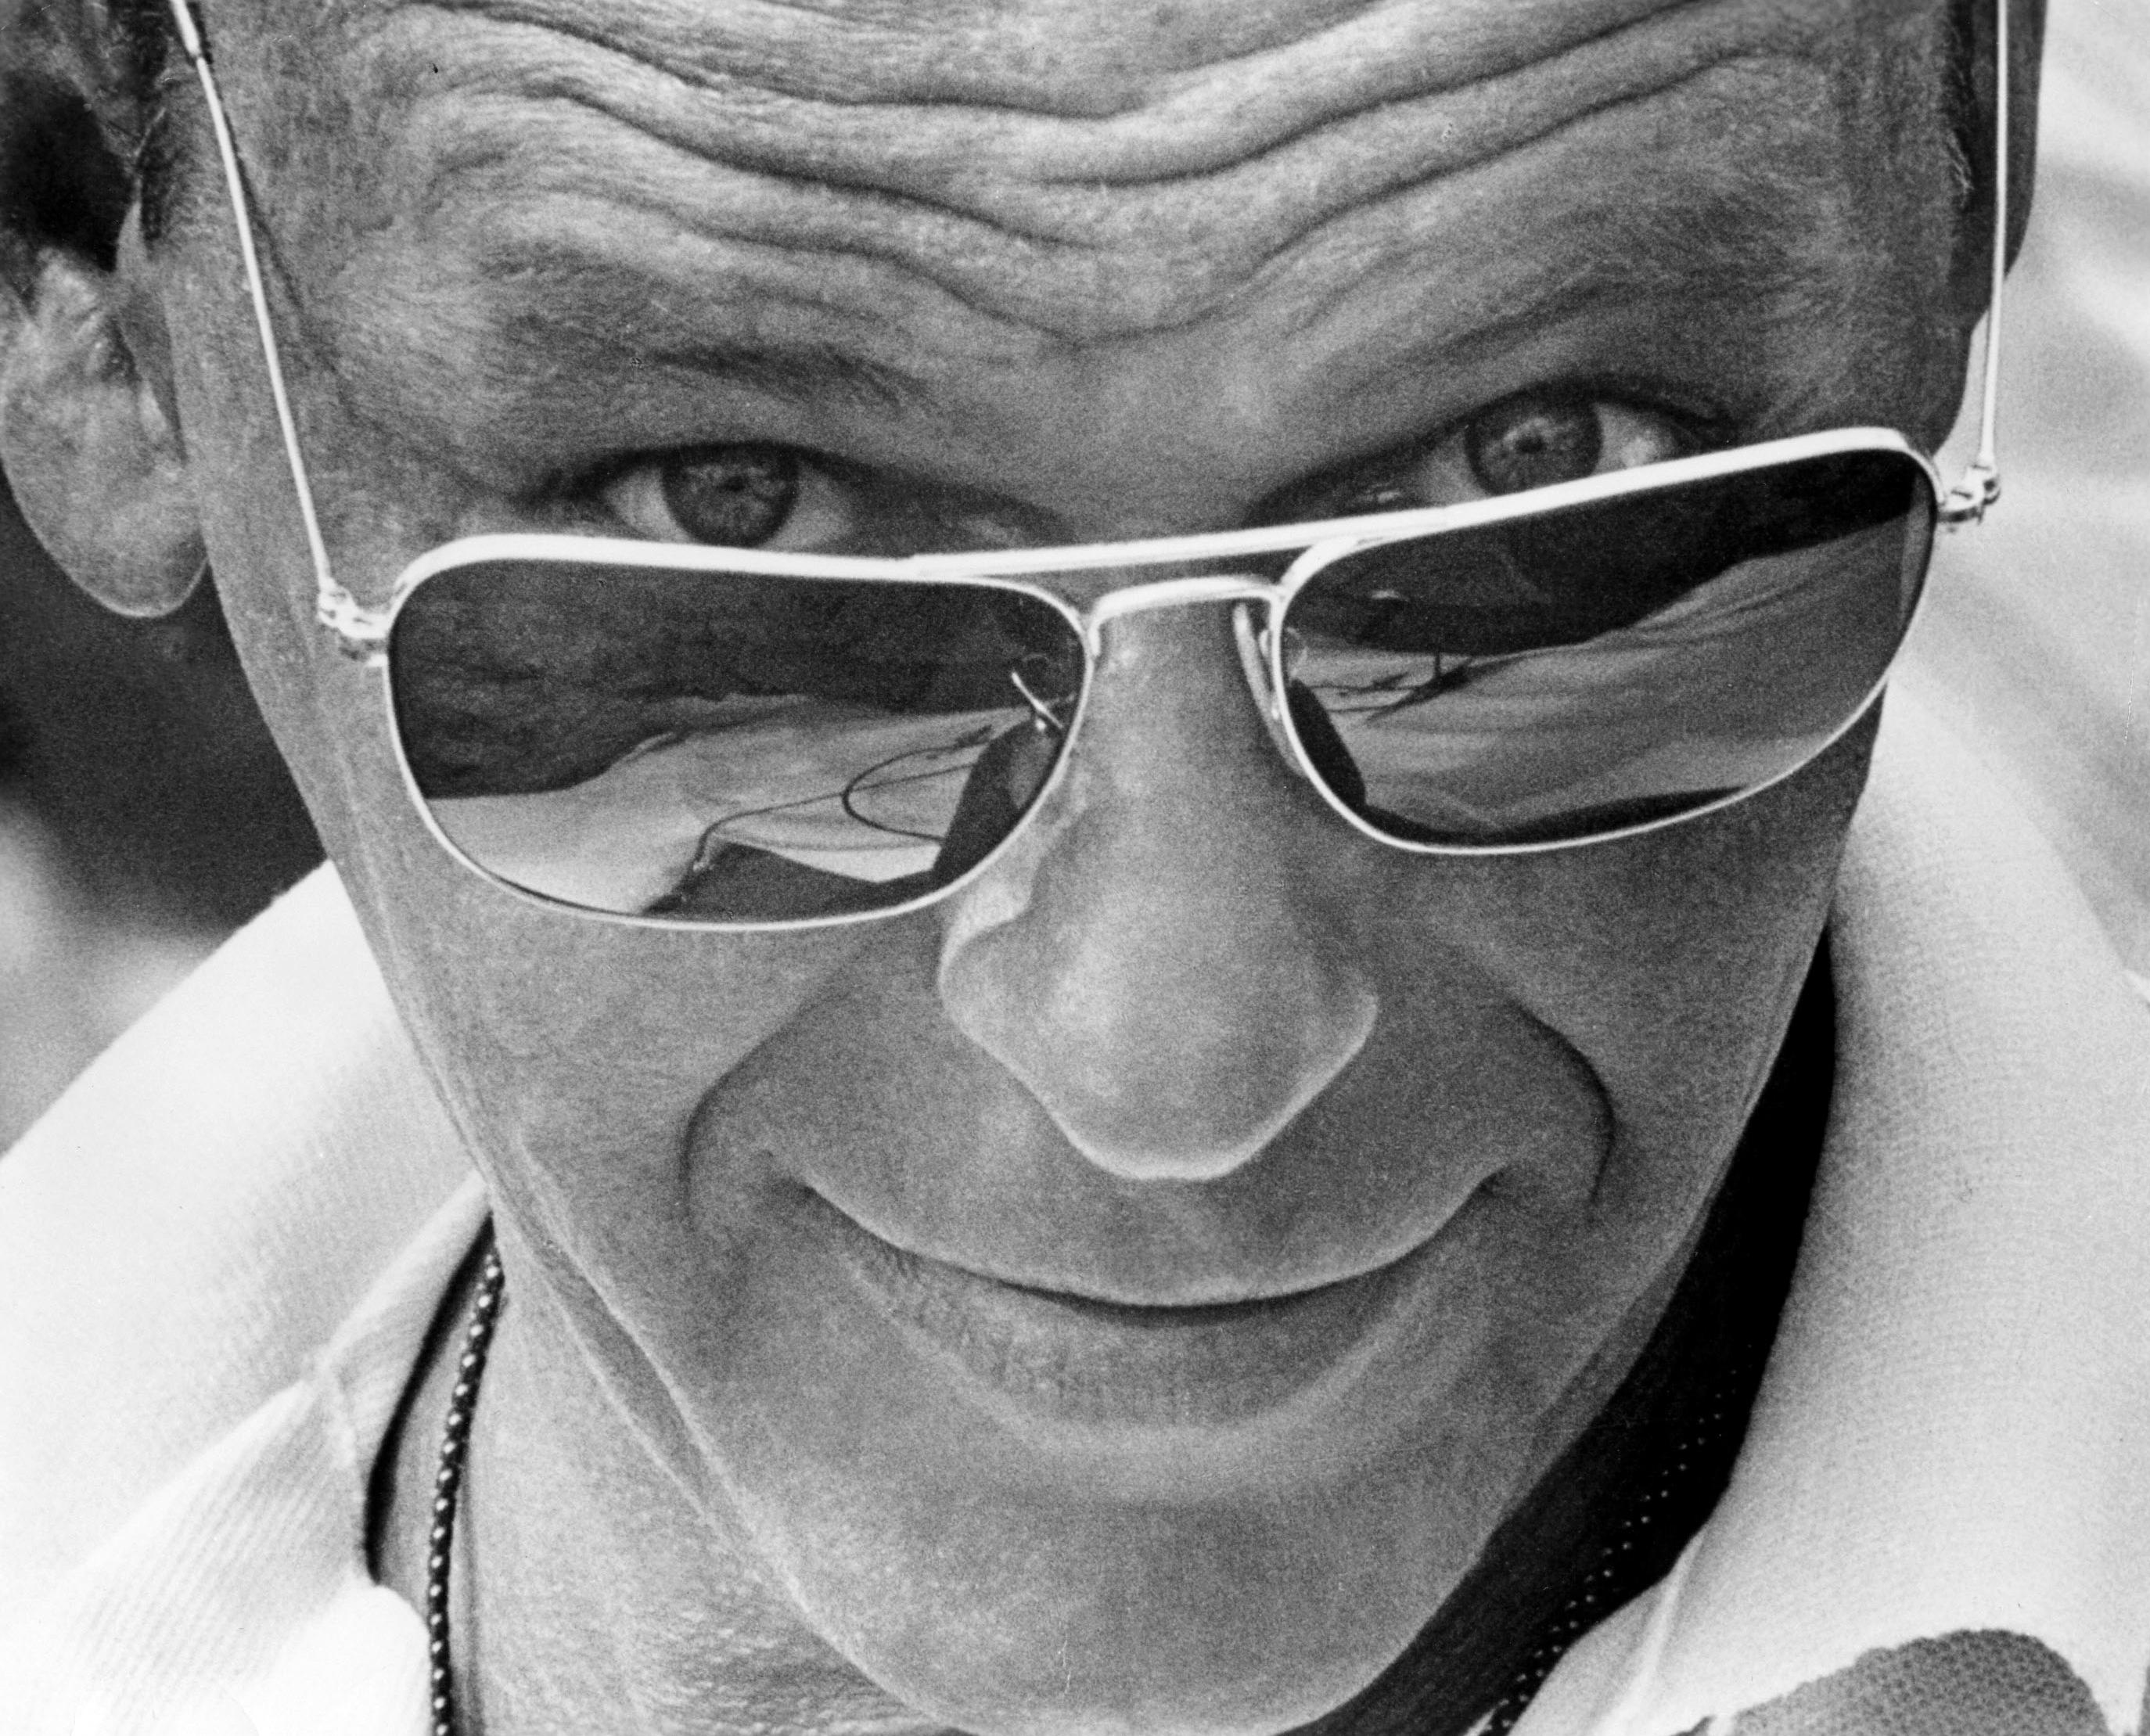 Unknown Portrait Photograph - Frank Sinatra Closeup in Sunglasses Globe Photos Fine Art Print